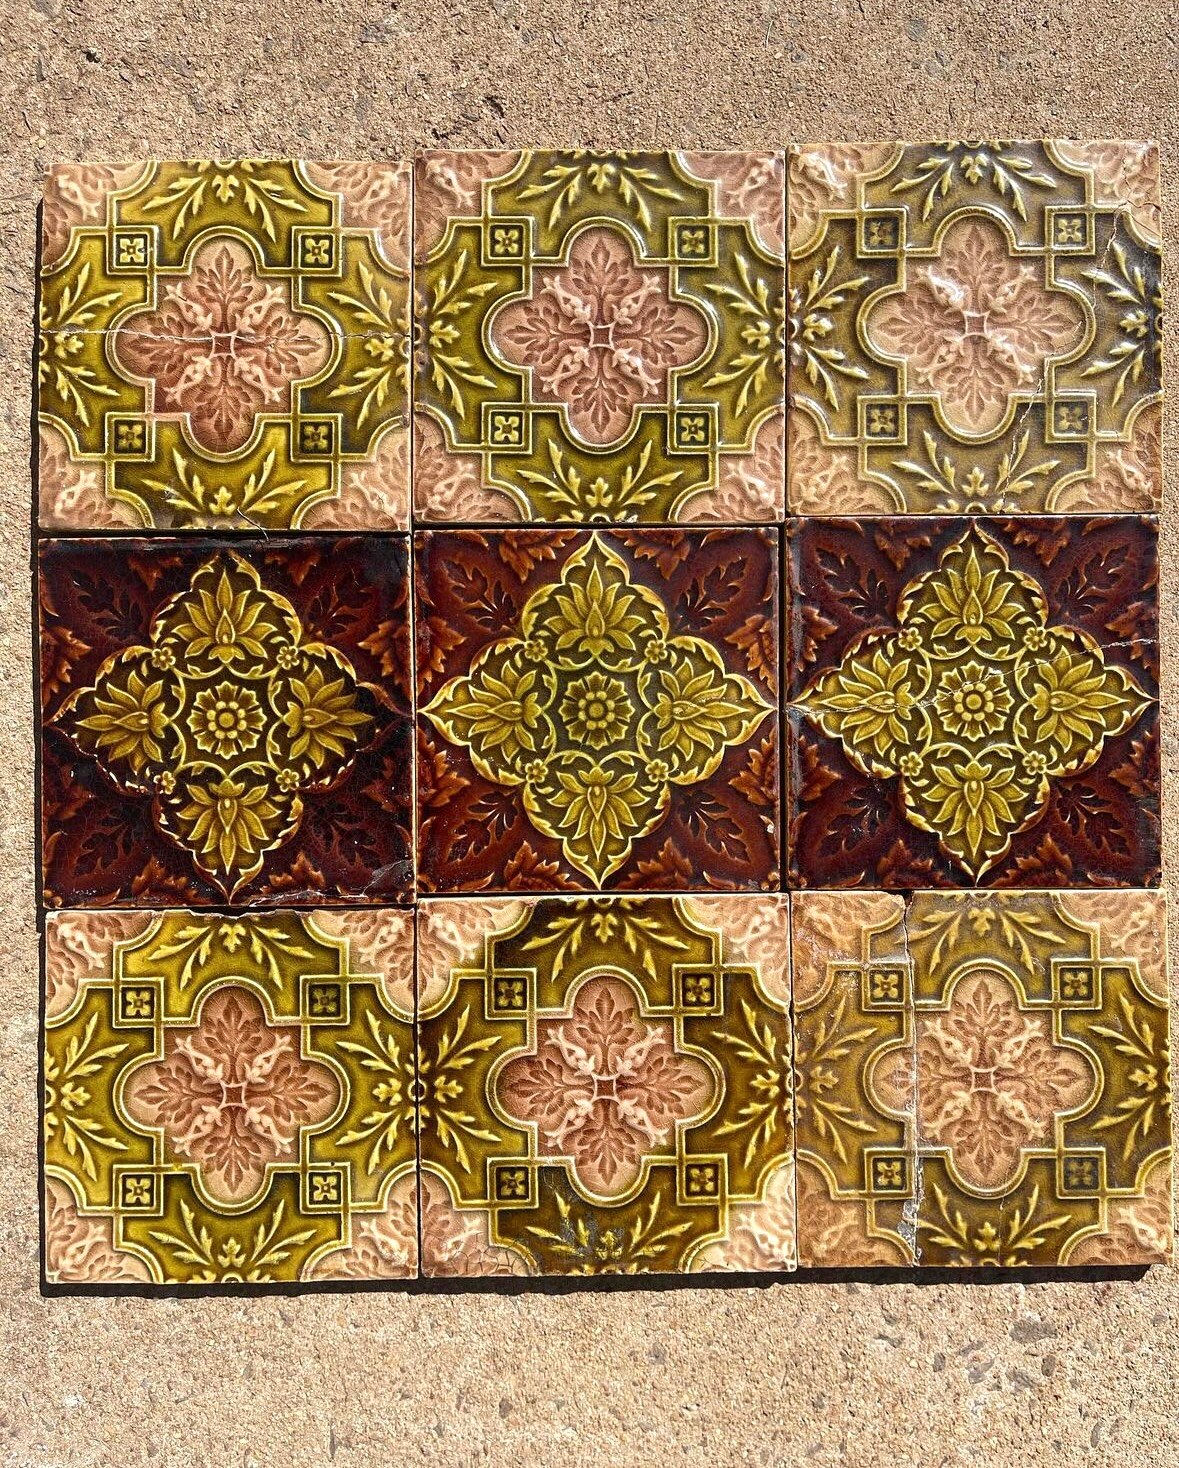 A set of deep-coloured glazed tiles with floral symbols